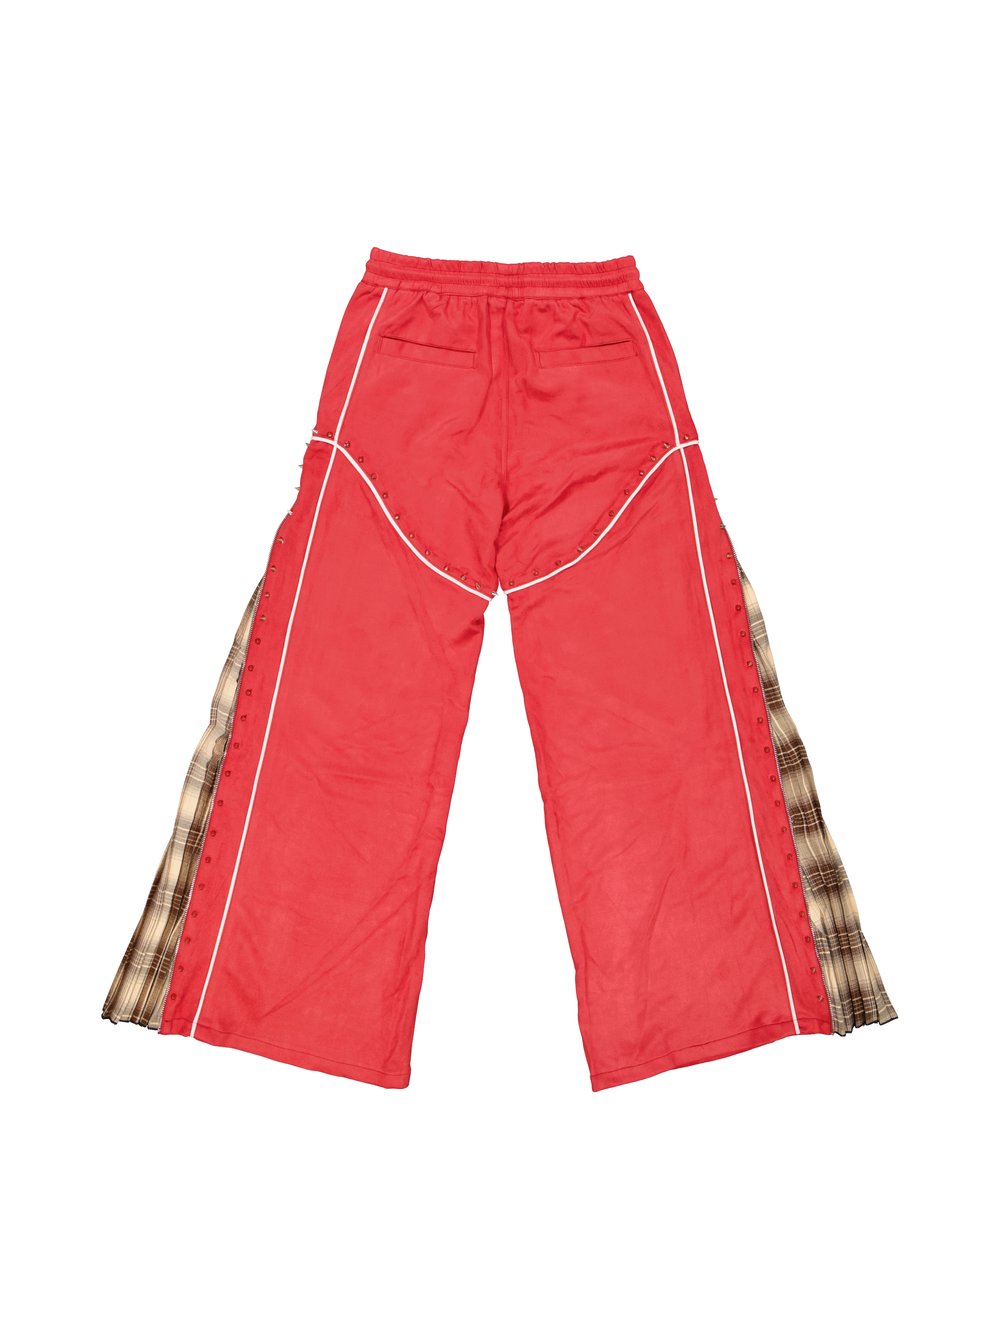 PLAID TRACKSUIT pants red